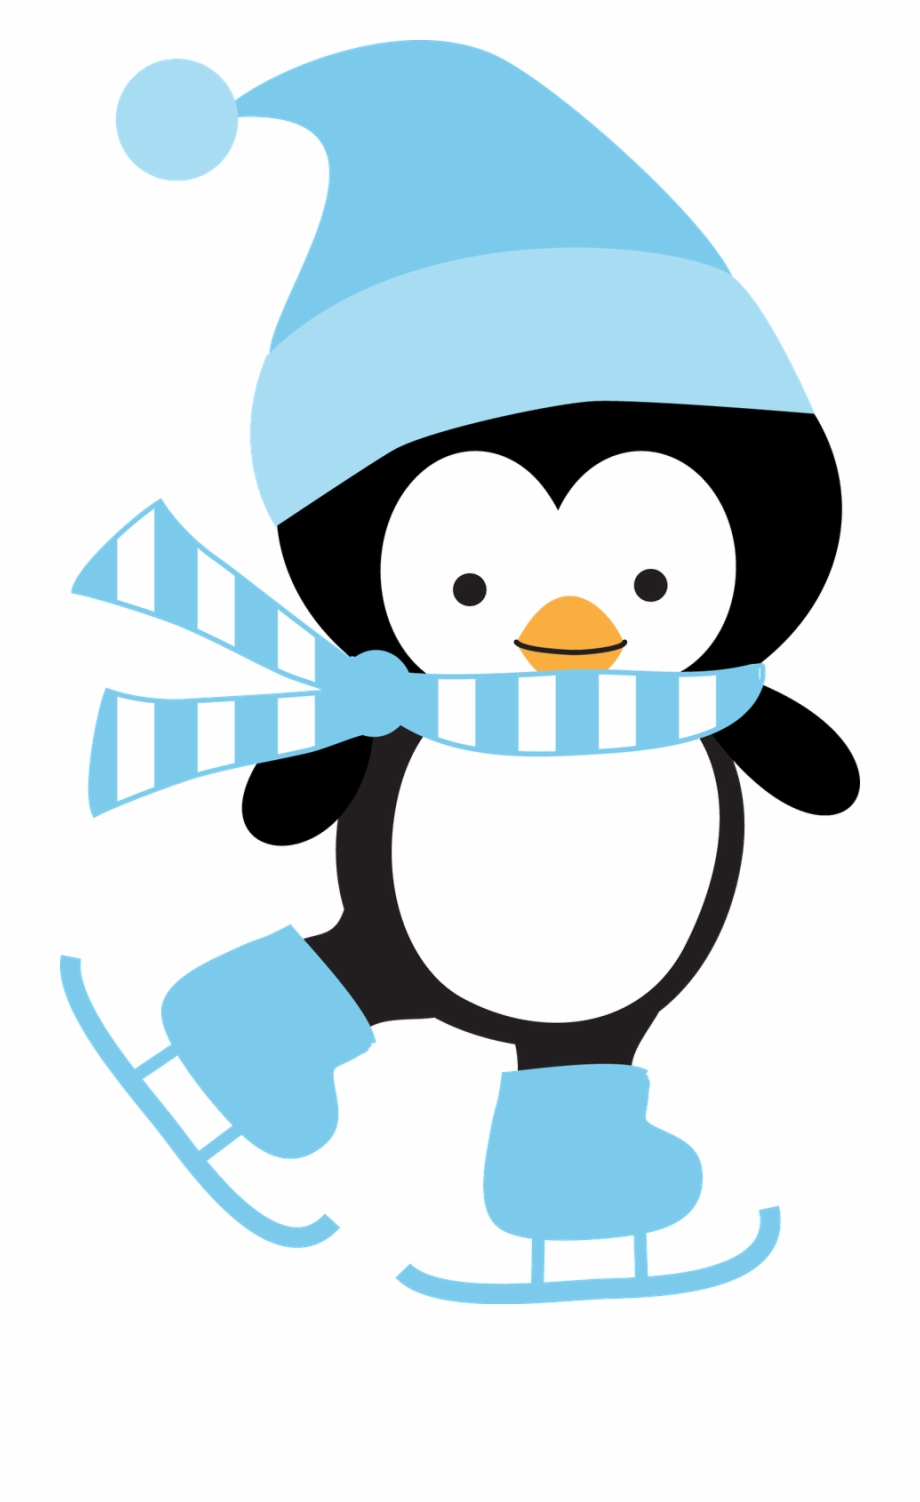 penguin clipart winter